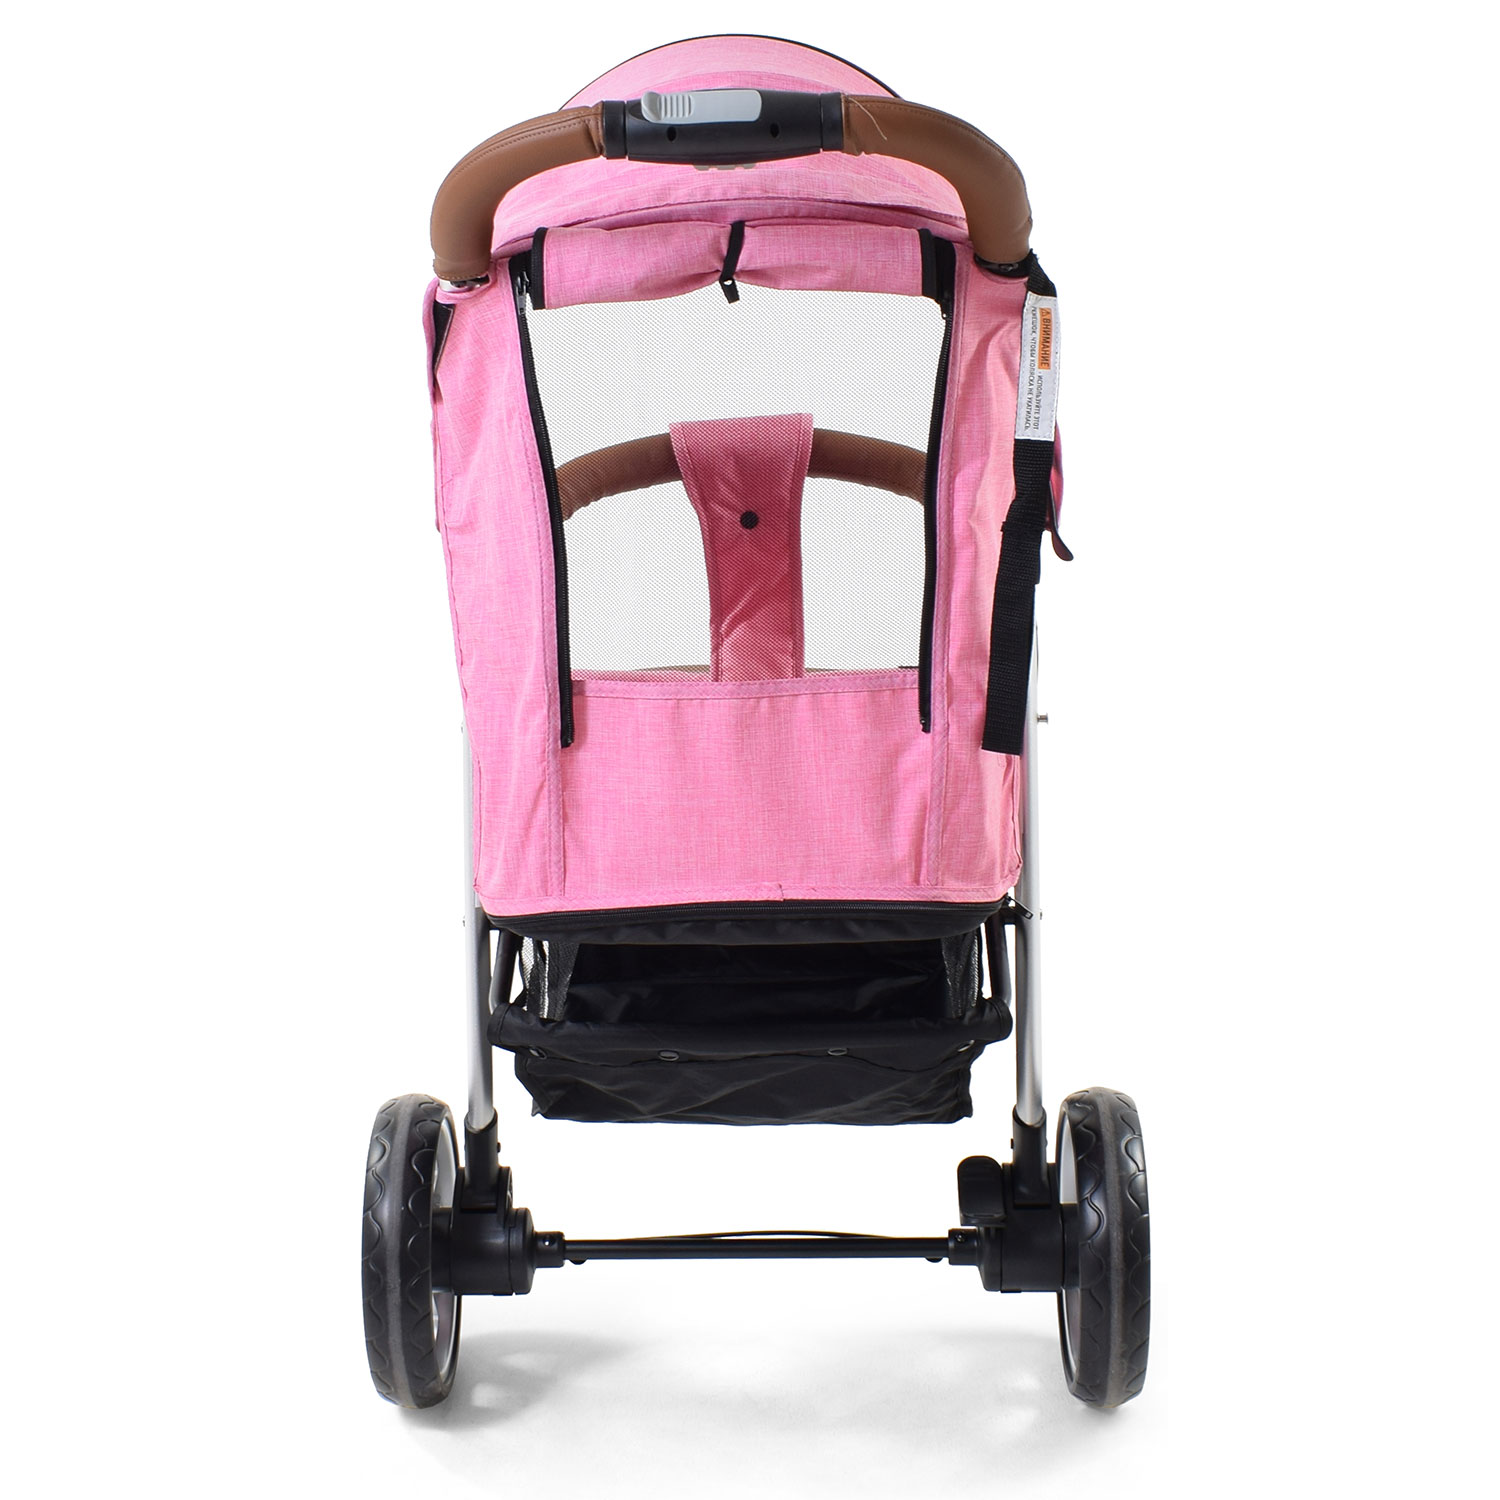 Прогулочная коляска Nuovita Corso, цвет розовый, шасси серебристое  